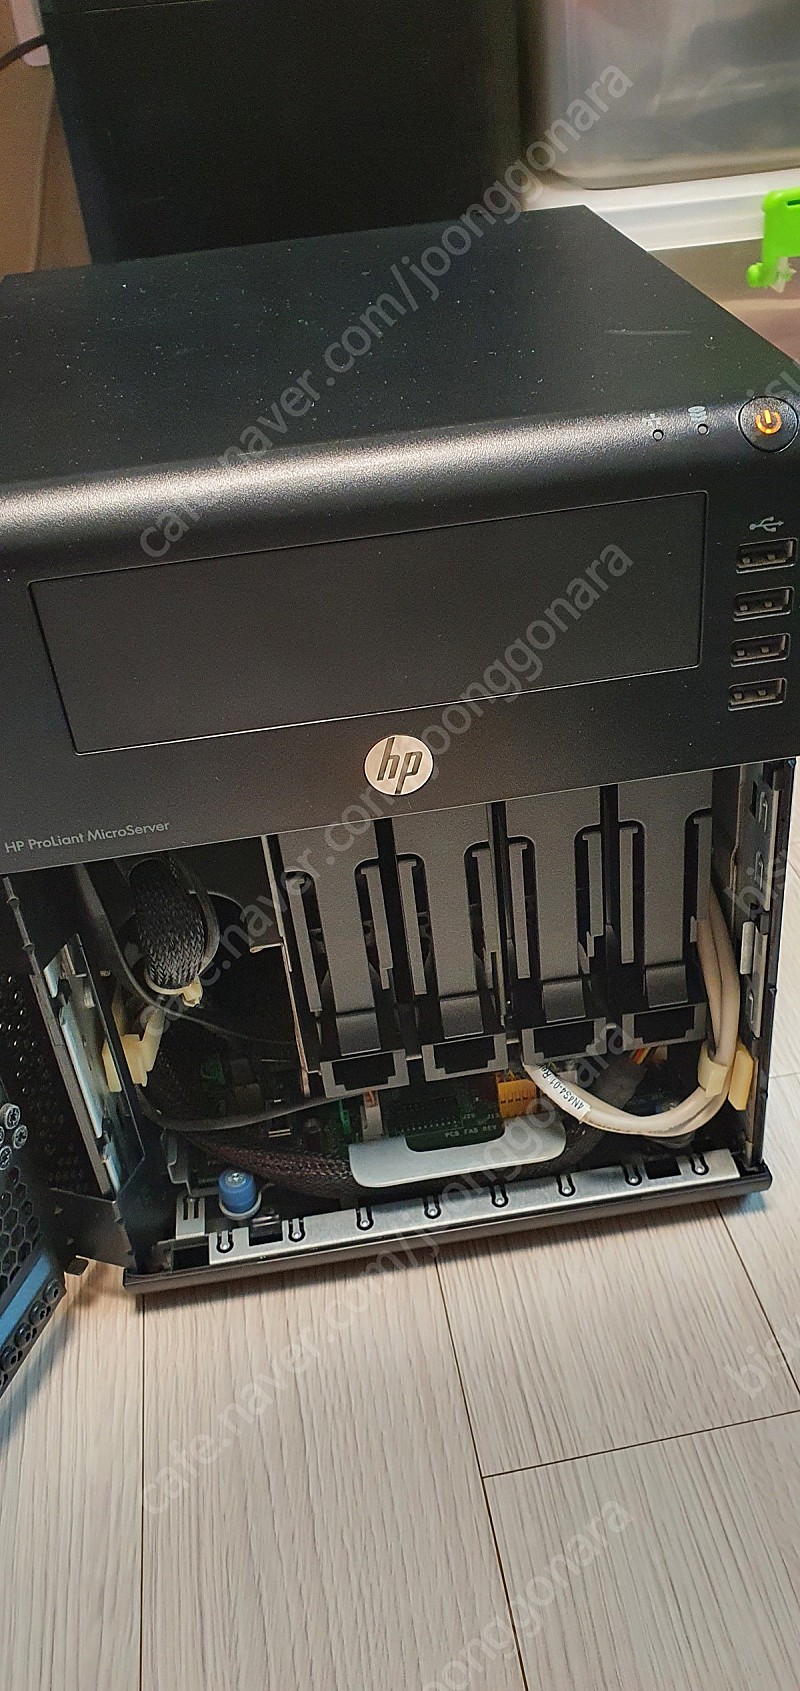 HP Proliant Microserver N36L (정상작동)